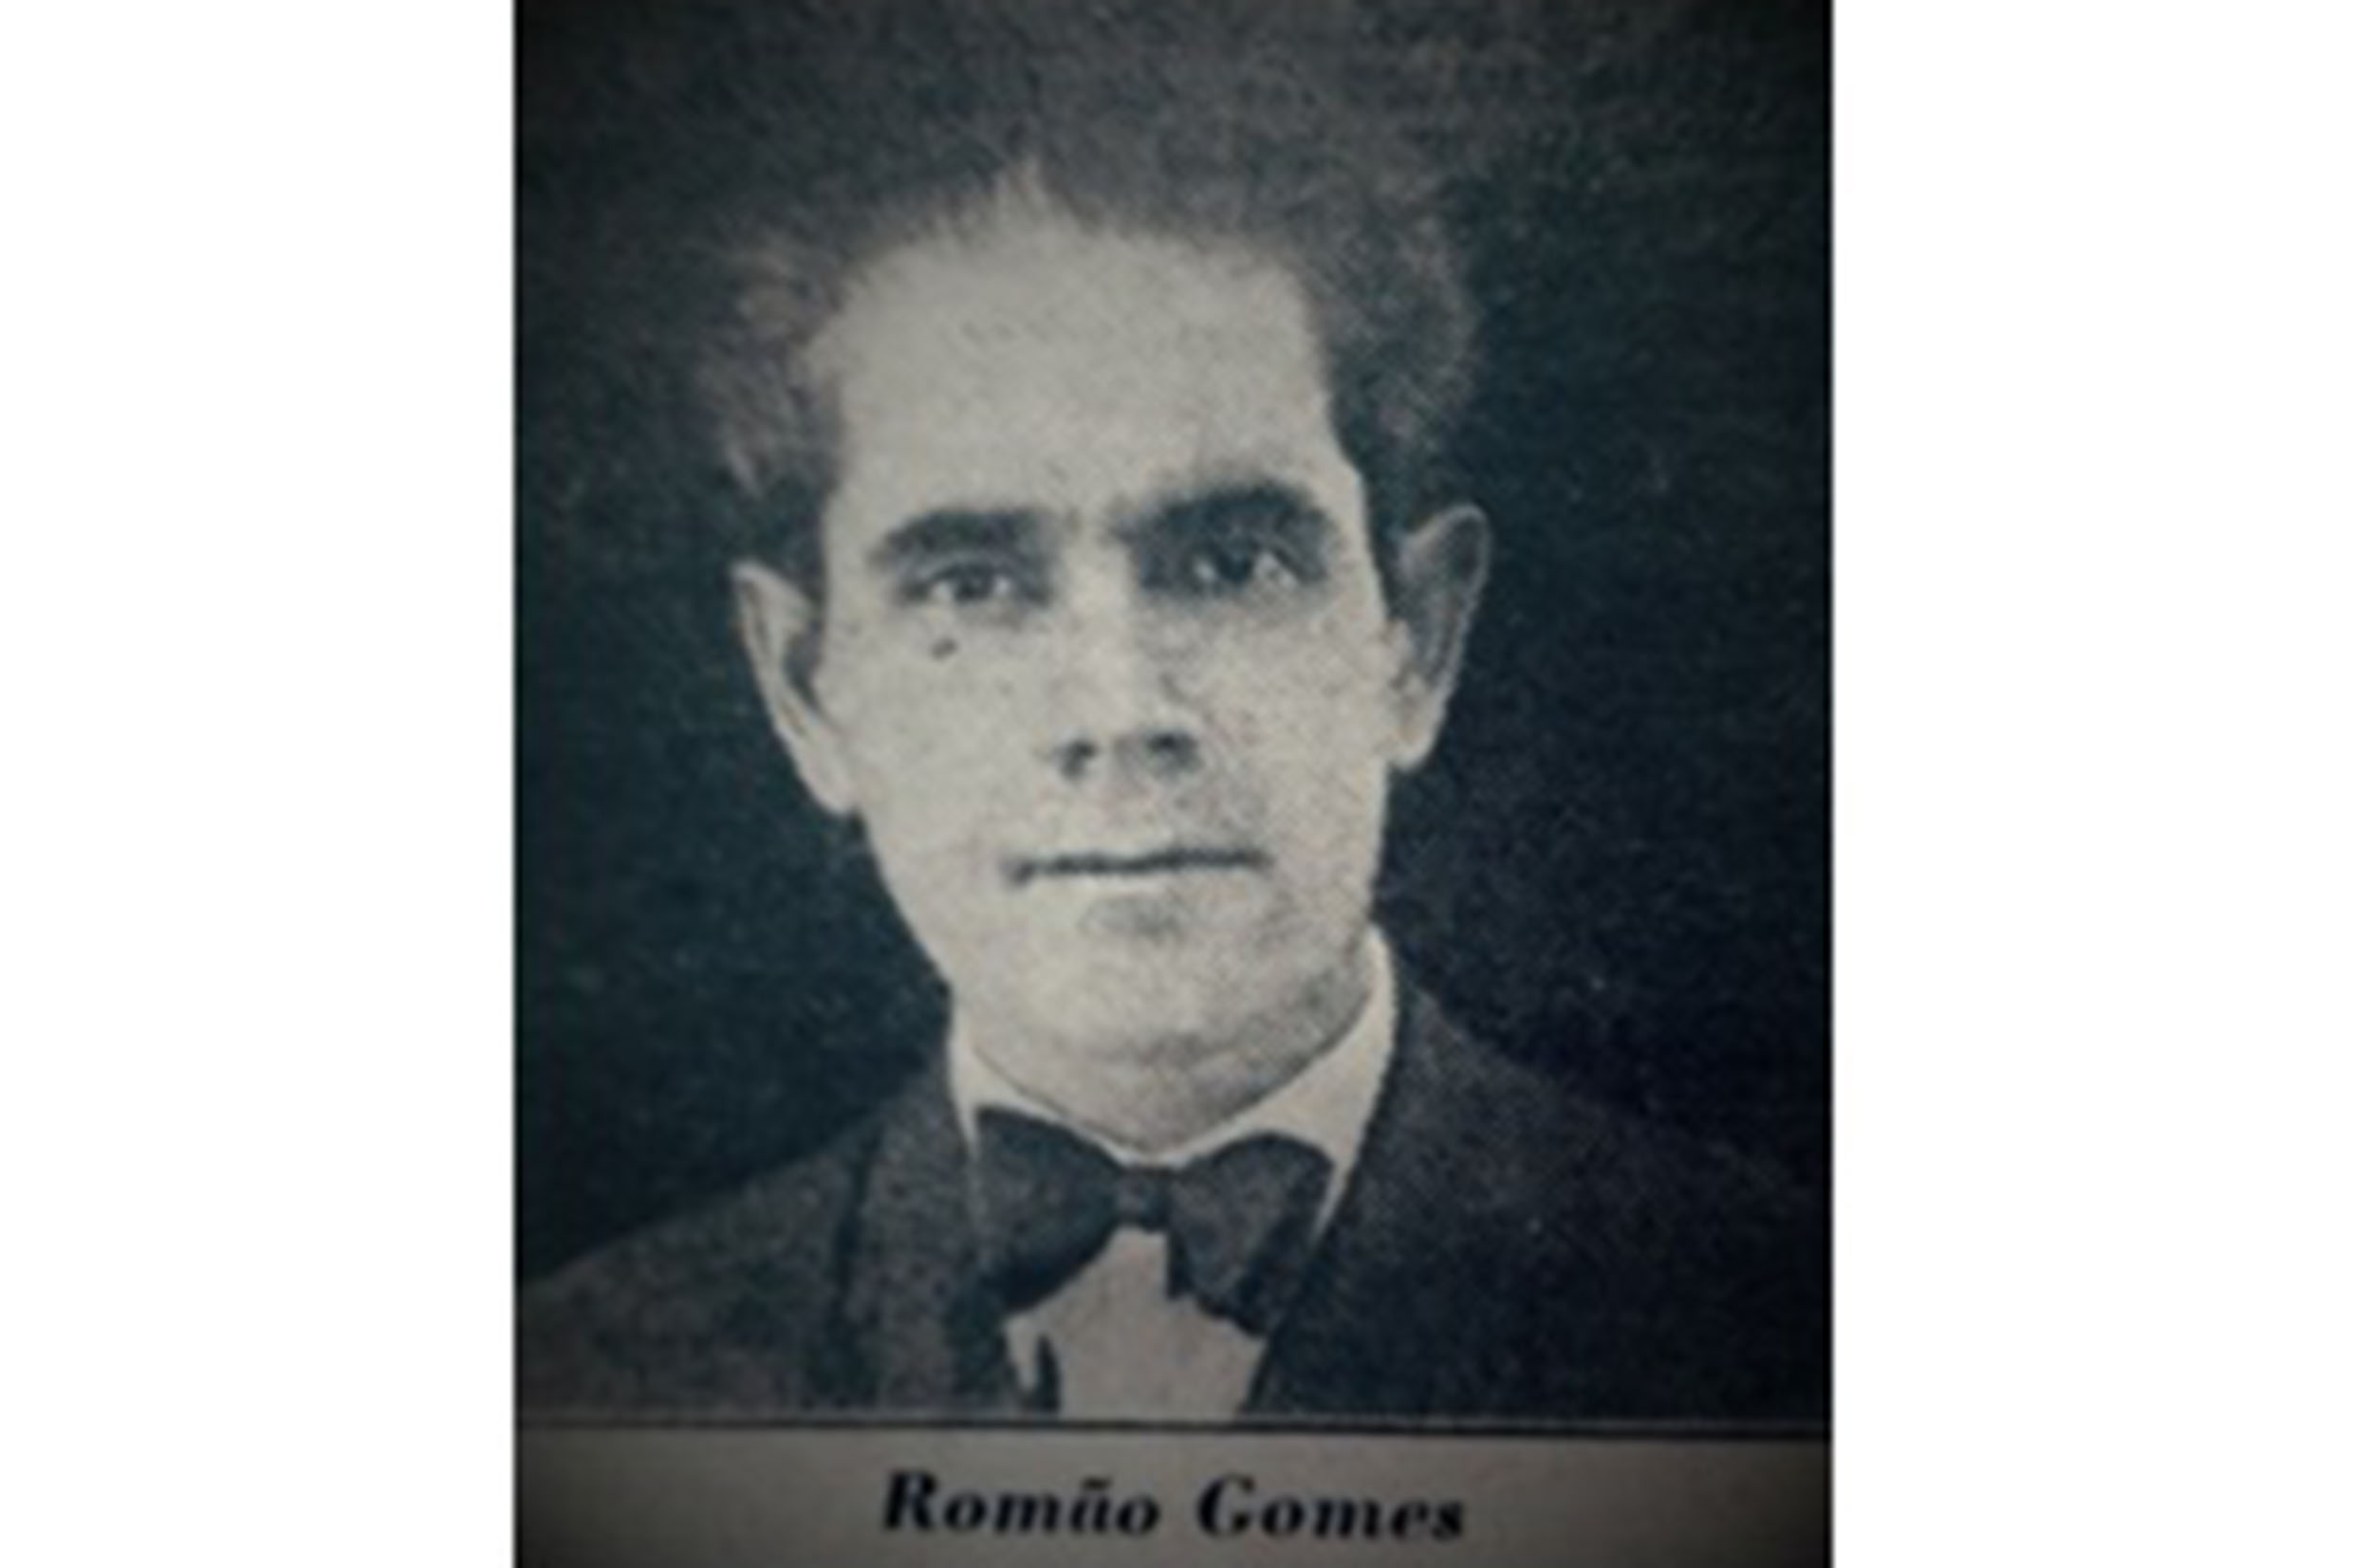 Romo Gomes<a style='float:right;color:#ccc' href='https://www3.al.sp.gov.br/repositorio/noticia/N-07-2020/fg251021.jpg' target=_blank><i class='bi bi-zoom-in'></i> Clique para ver a imagem </a>